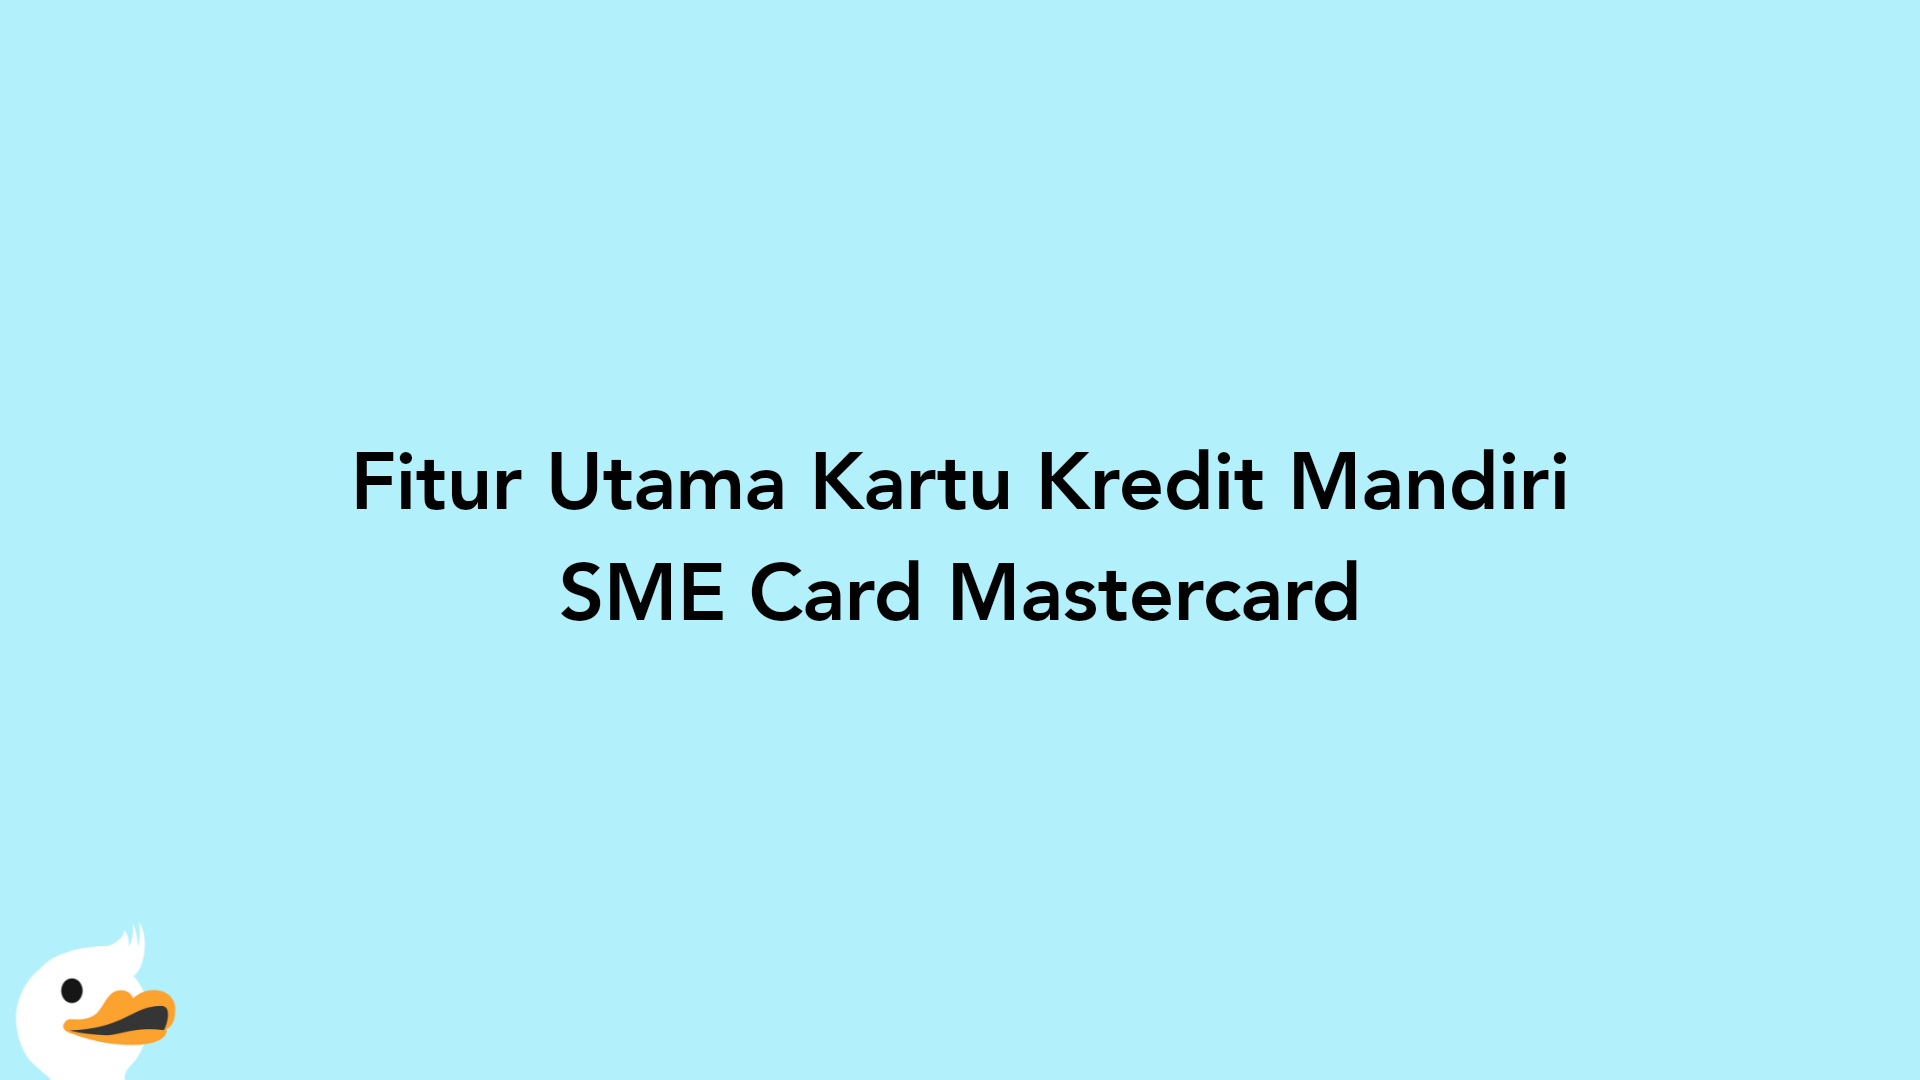 Fitur Utama Kartu Kredit Mandiri SME Card Mastercard